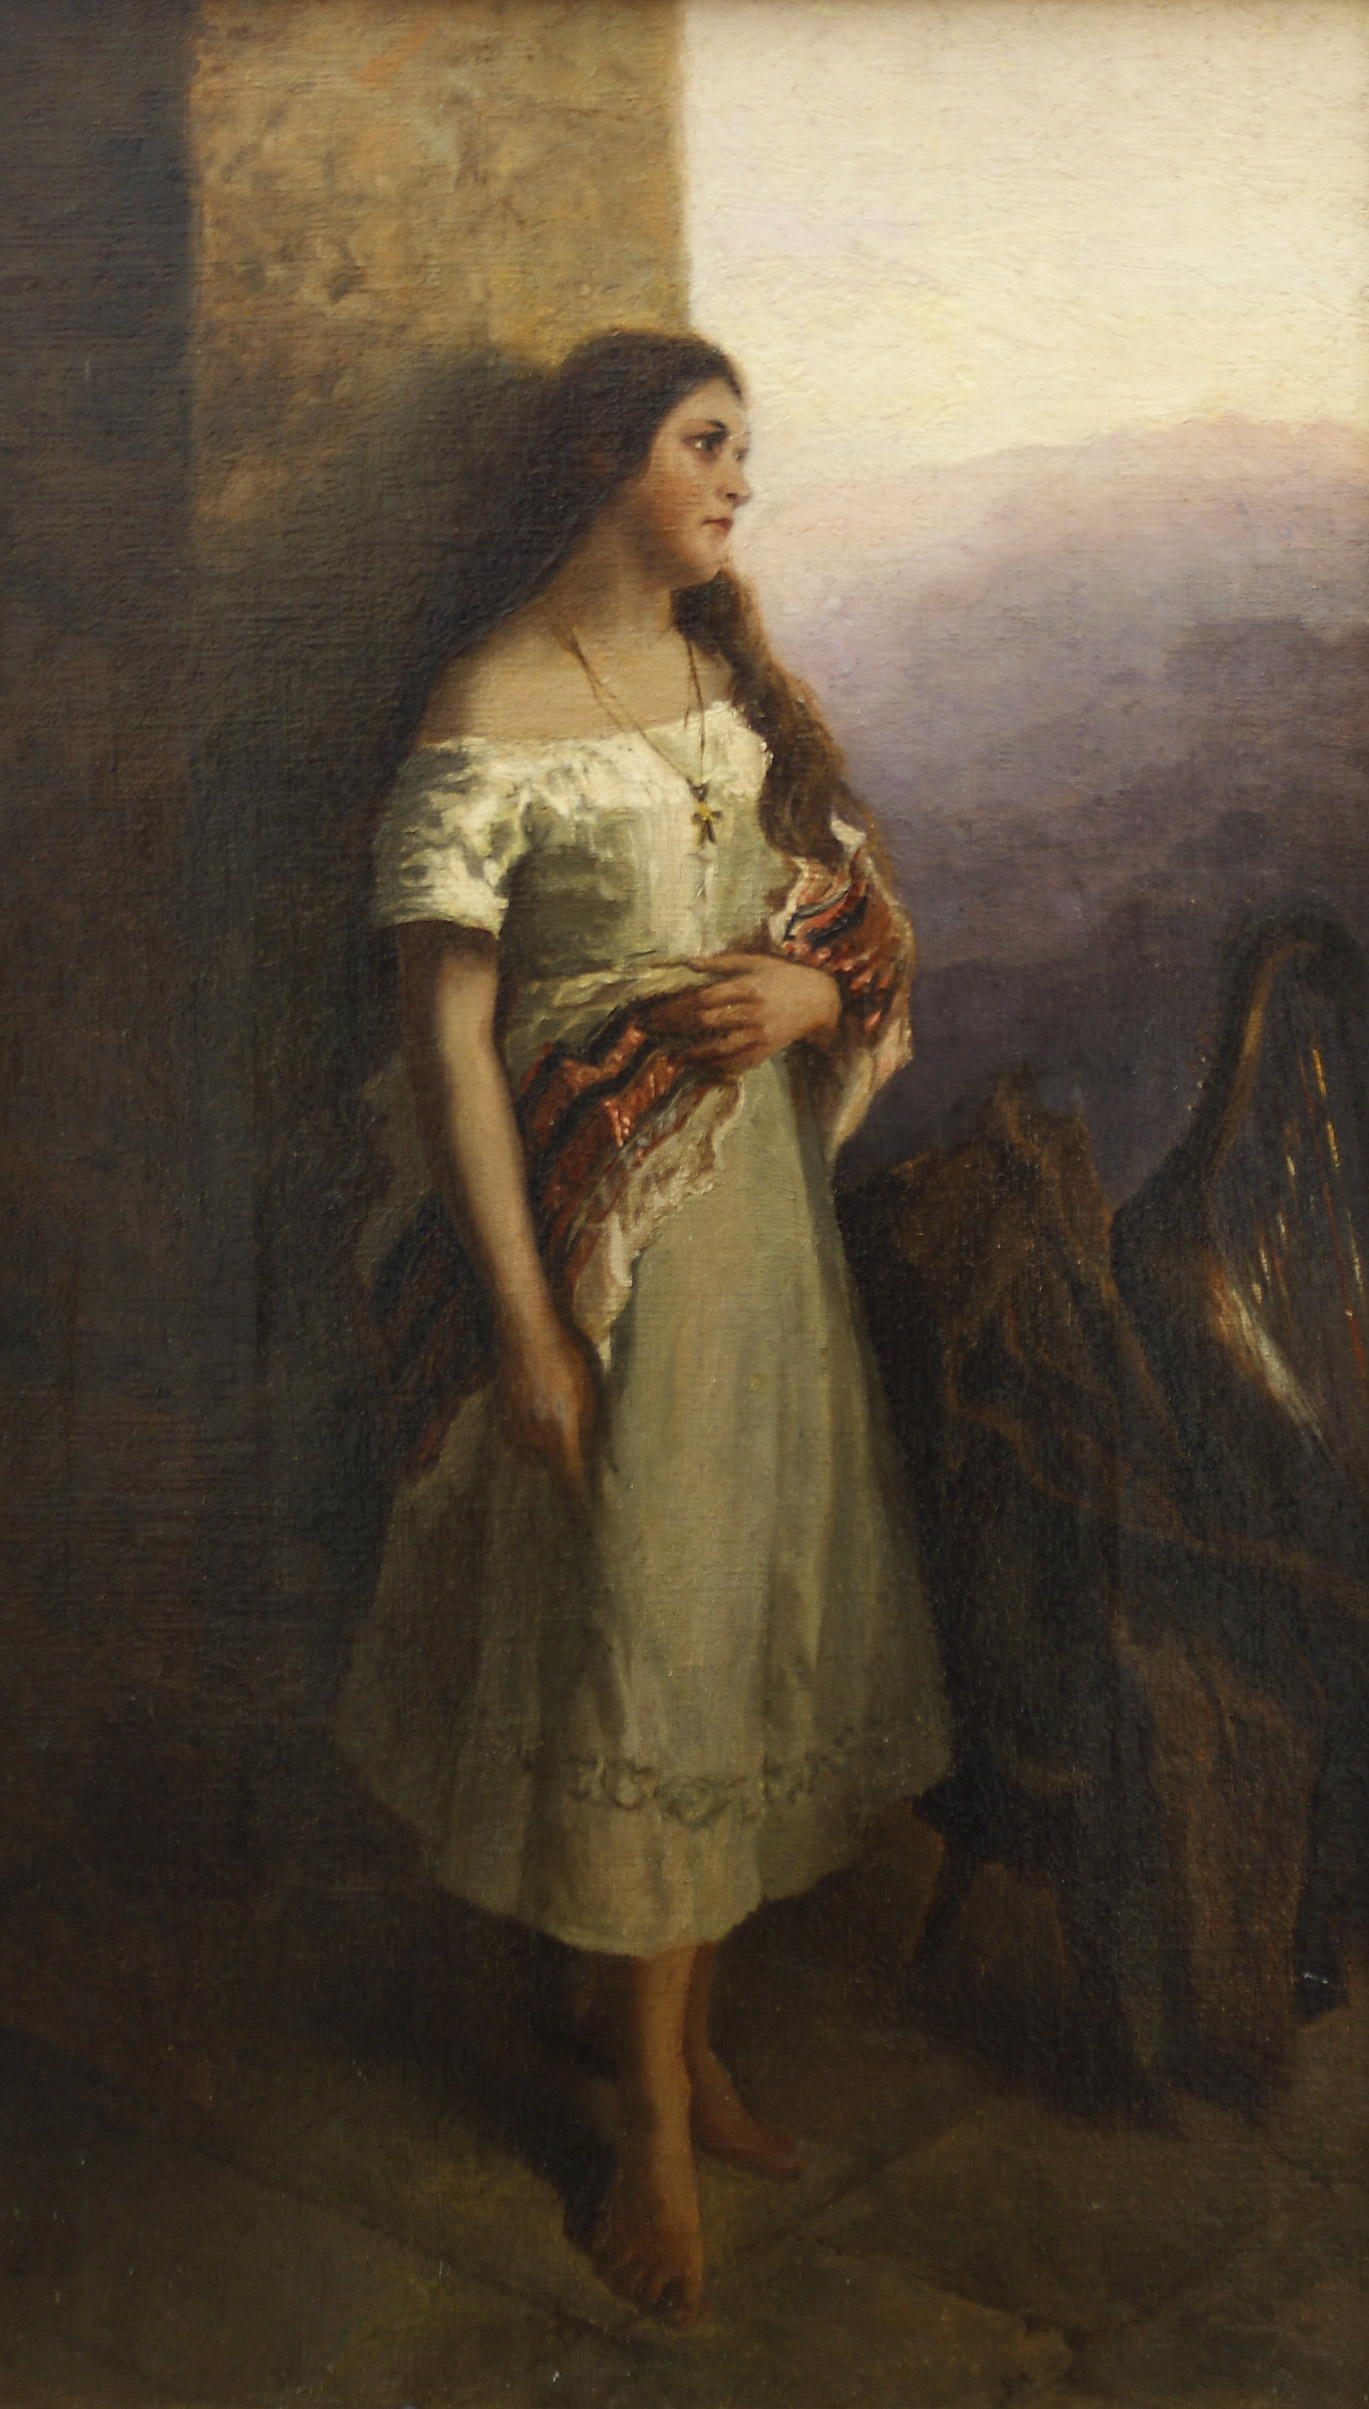 Auktionshaus Quentin Berlin  Gemälde Vautier  Benjamin d. Ã. (1829 Morges - 1898 DÃ¼sseldorf) / Stehendes MÃ¤dchen mit einer Harfe. Ãl auf Leinwand. 49 x 29 cm. Links unten mono